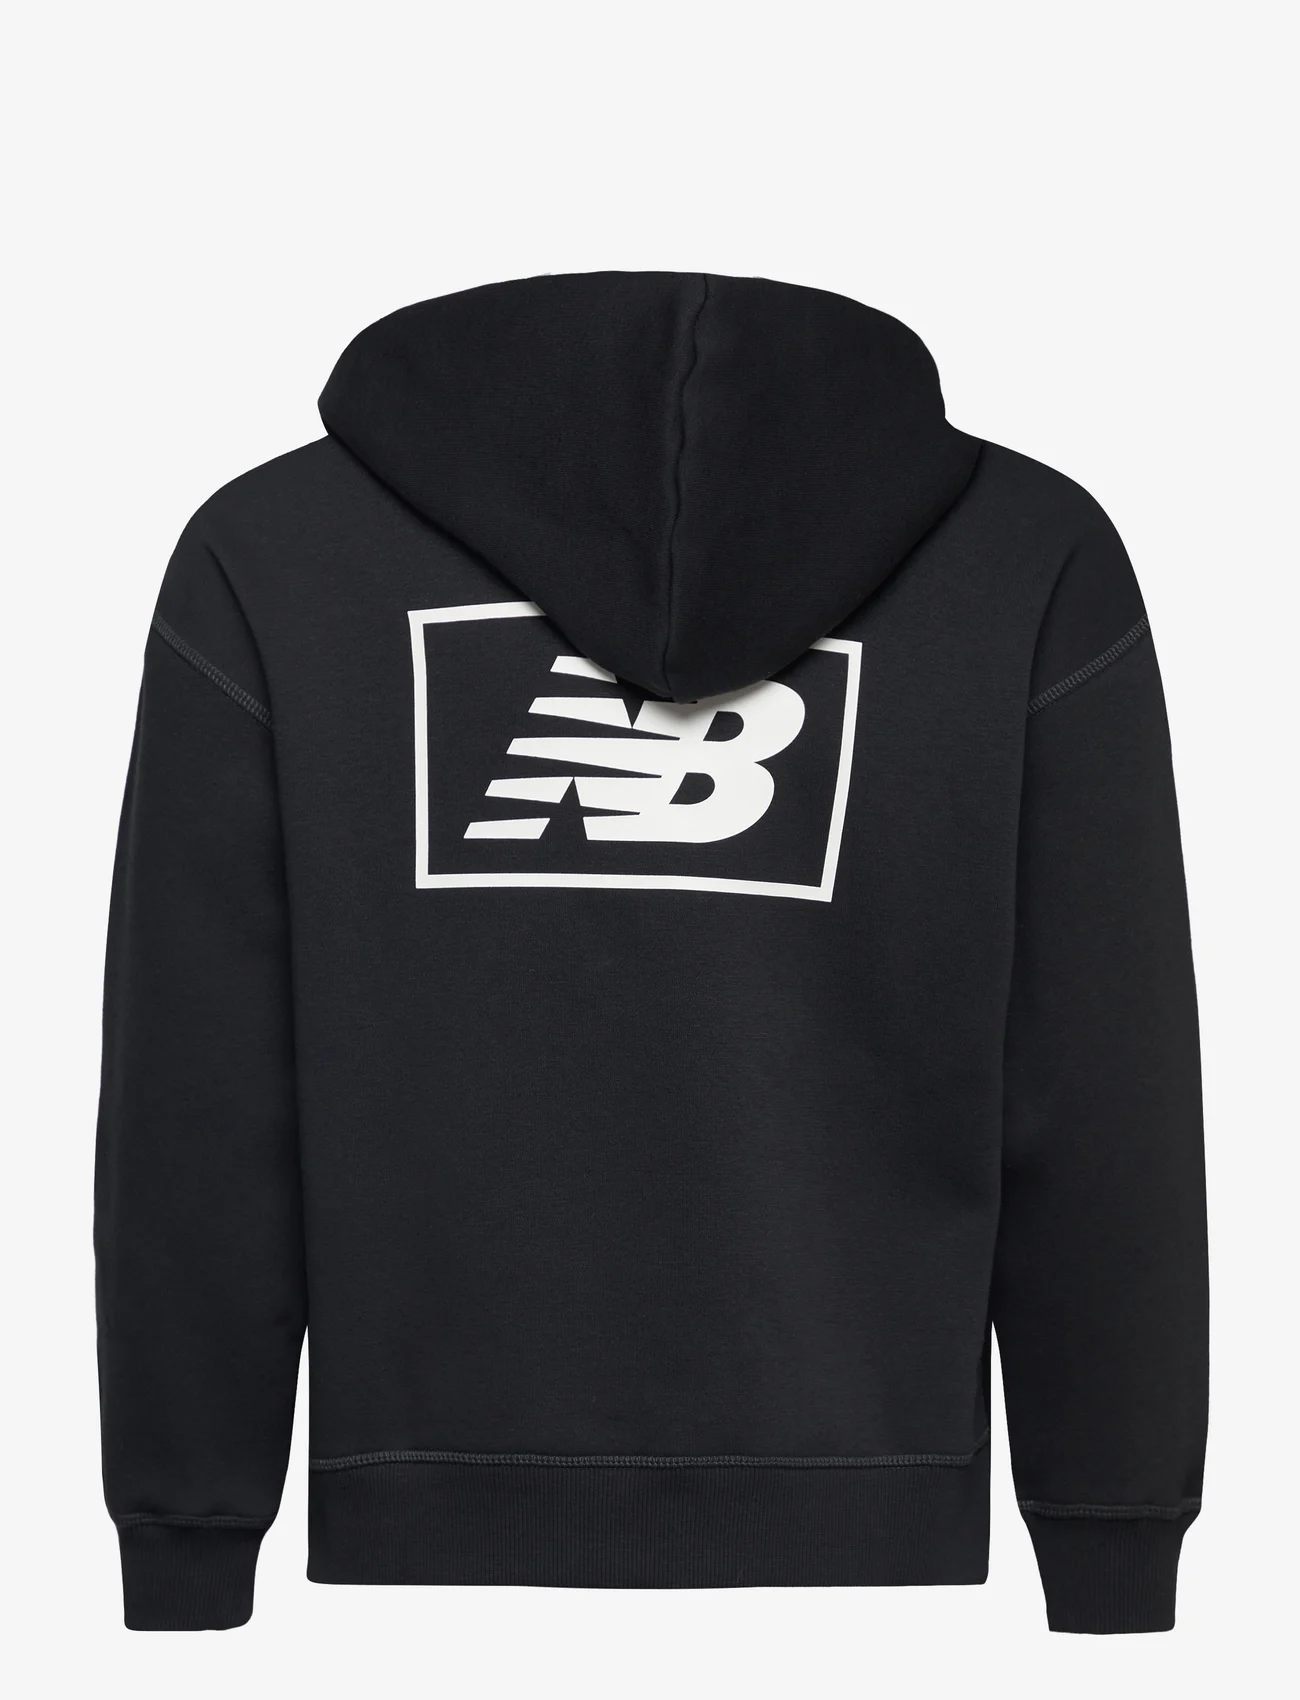 New Balance - NB Essentials Graphic BB Fleece Hoodie - hoodies - black - 1